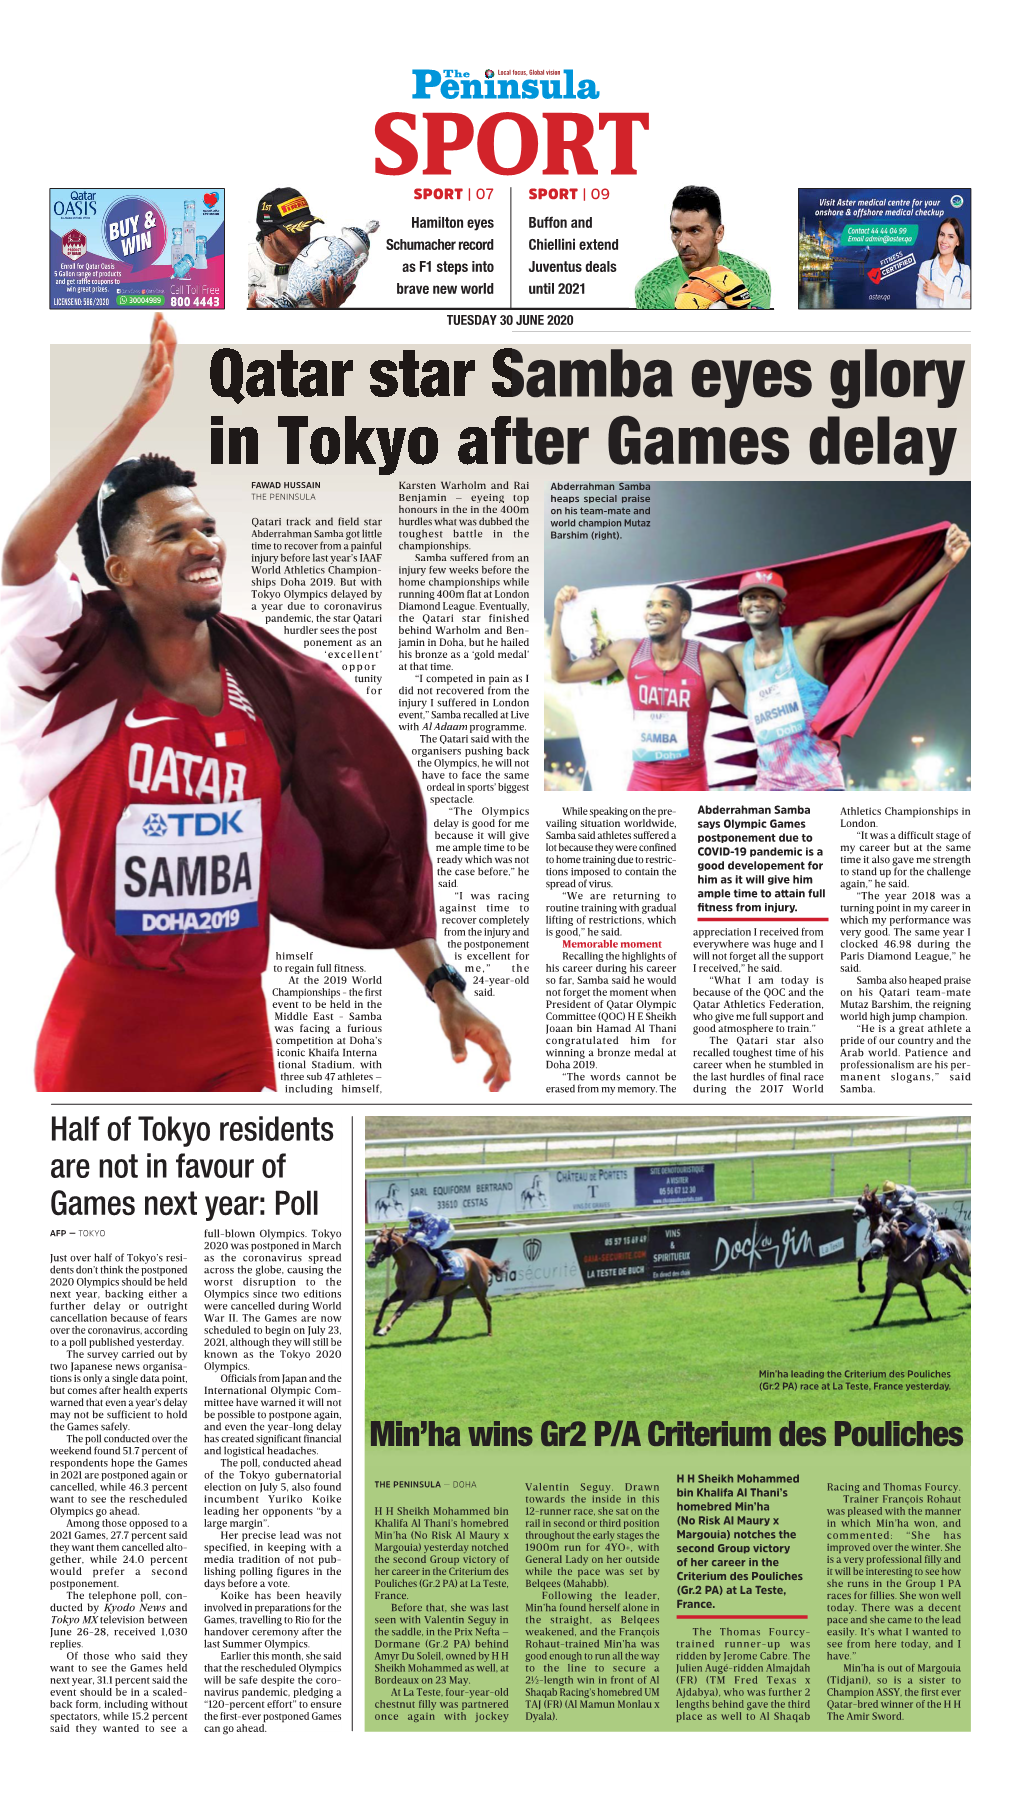 Qatar Star Samba Eyes Glory in Tokyo After Games Delay